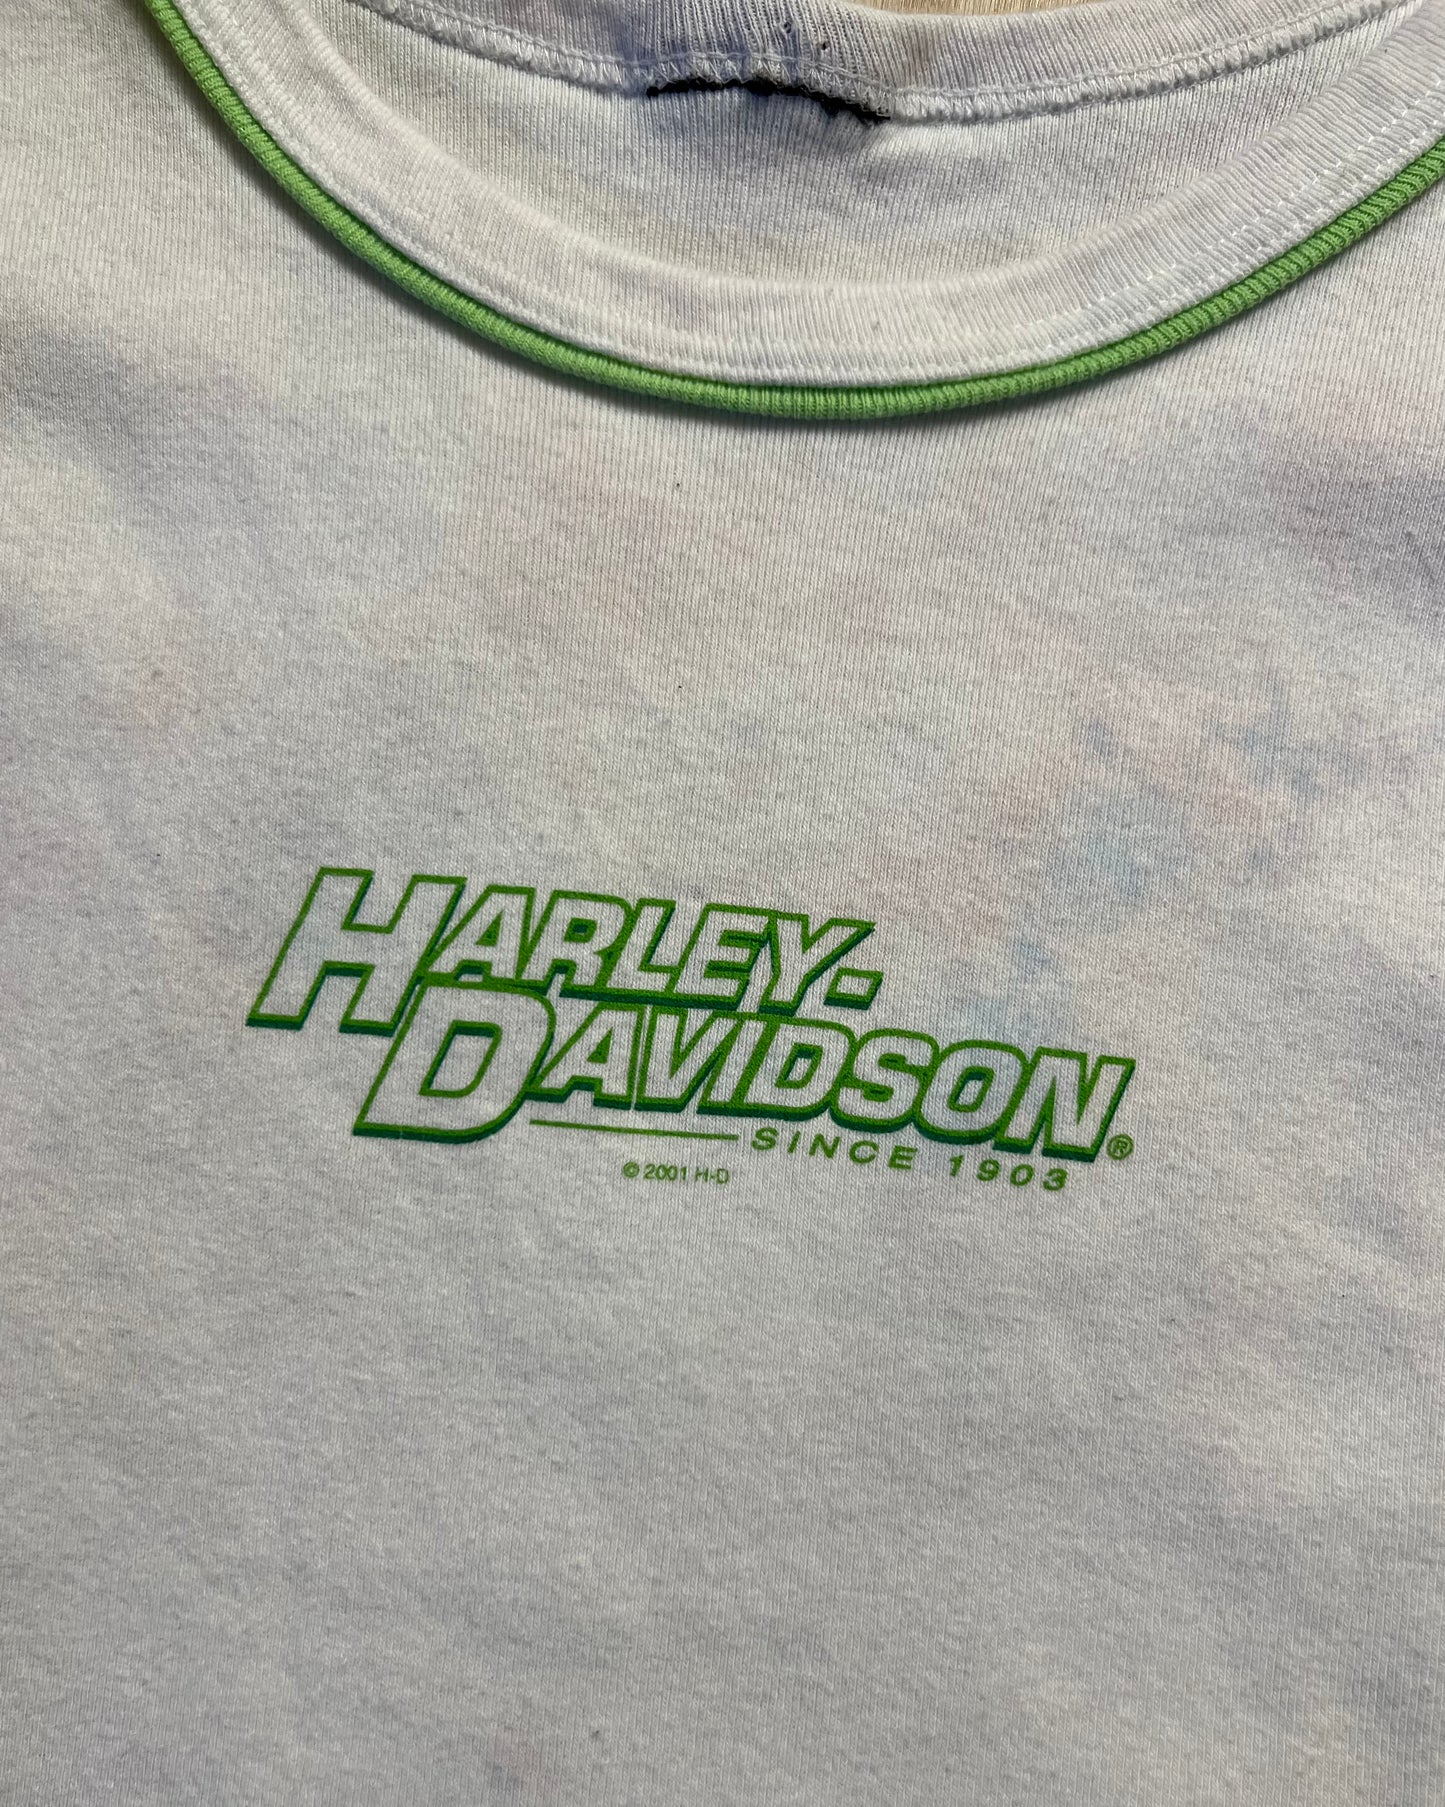 2001 Harley Davidson Gillette, Wyoming Tank Top